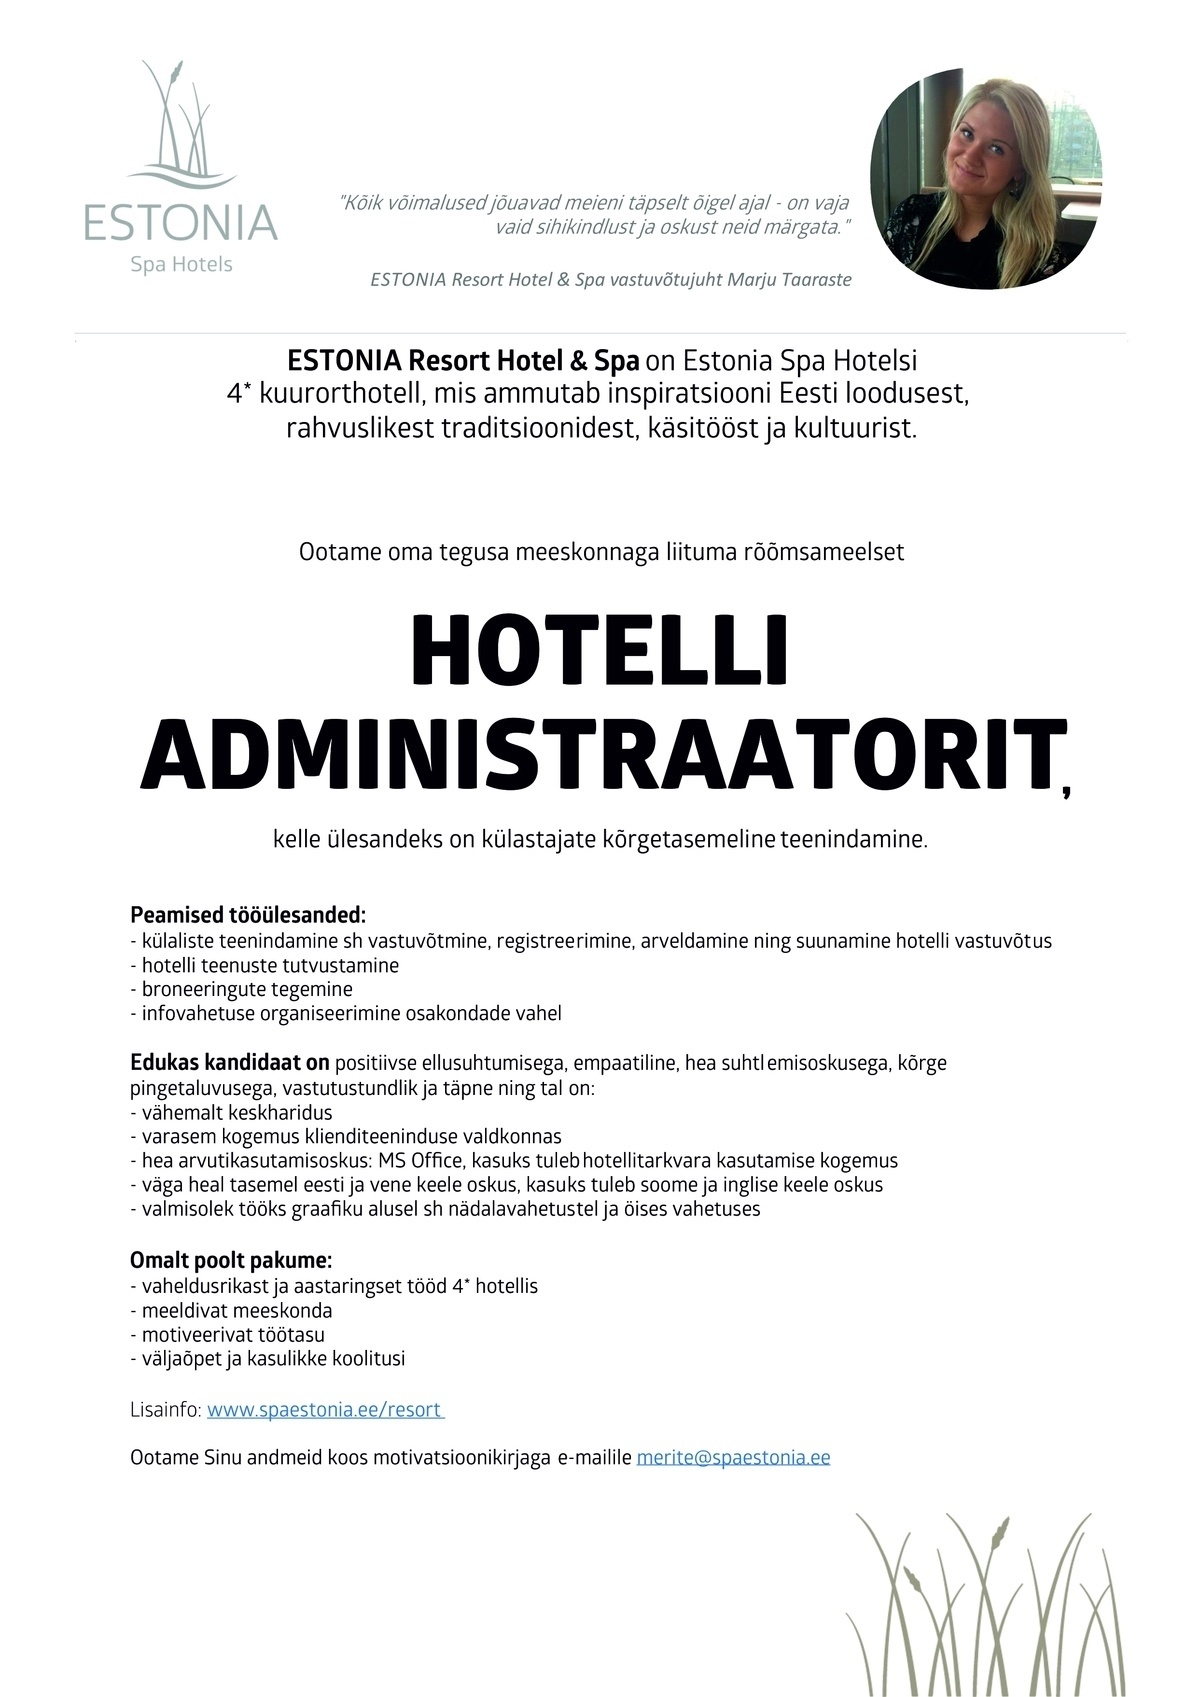 Estonia Spa Hotels AS Hotelli administraator